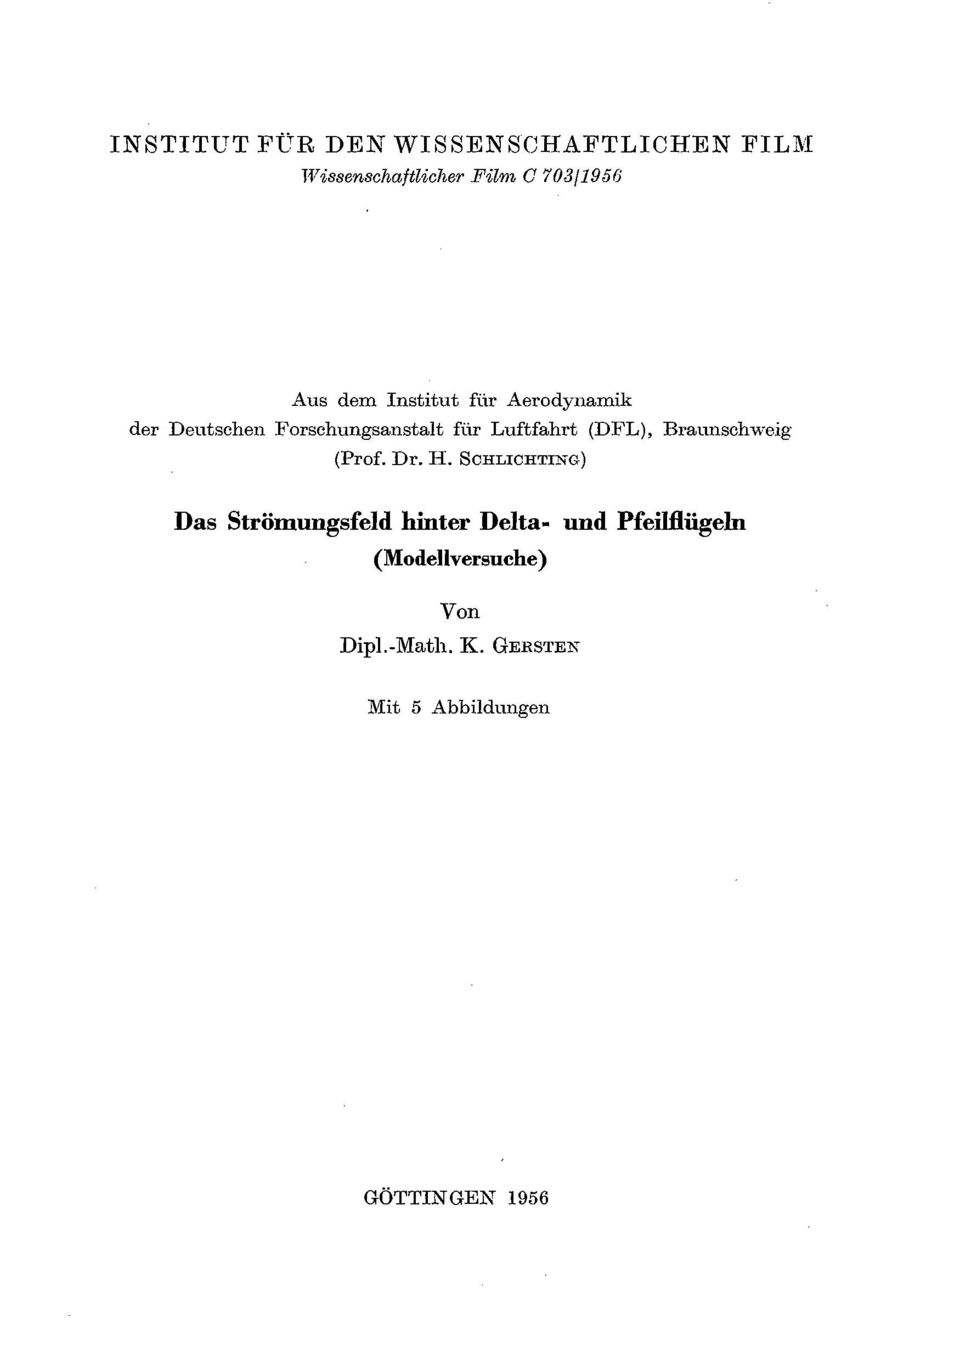 Braunschweig (Prof. Dr. H.